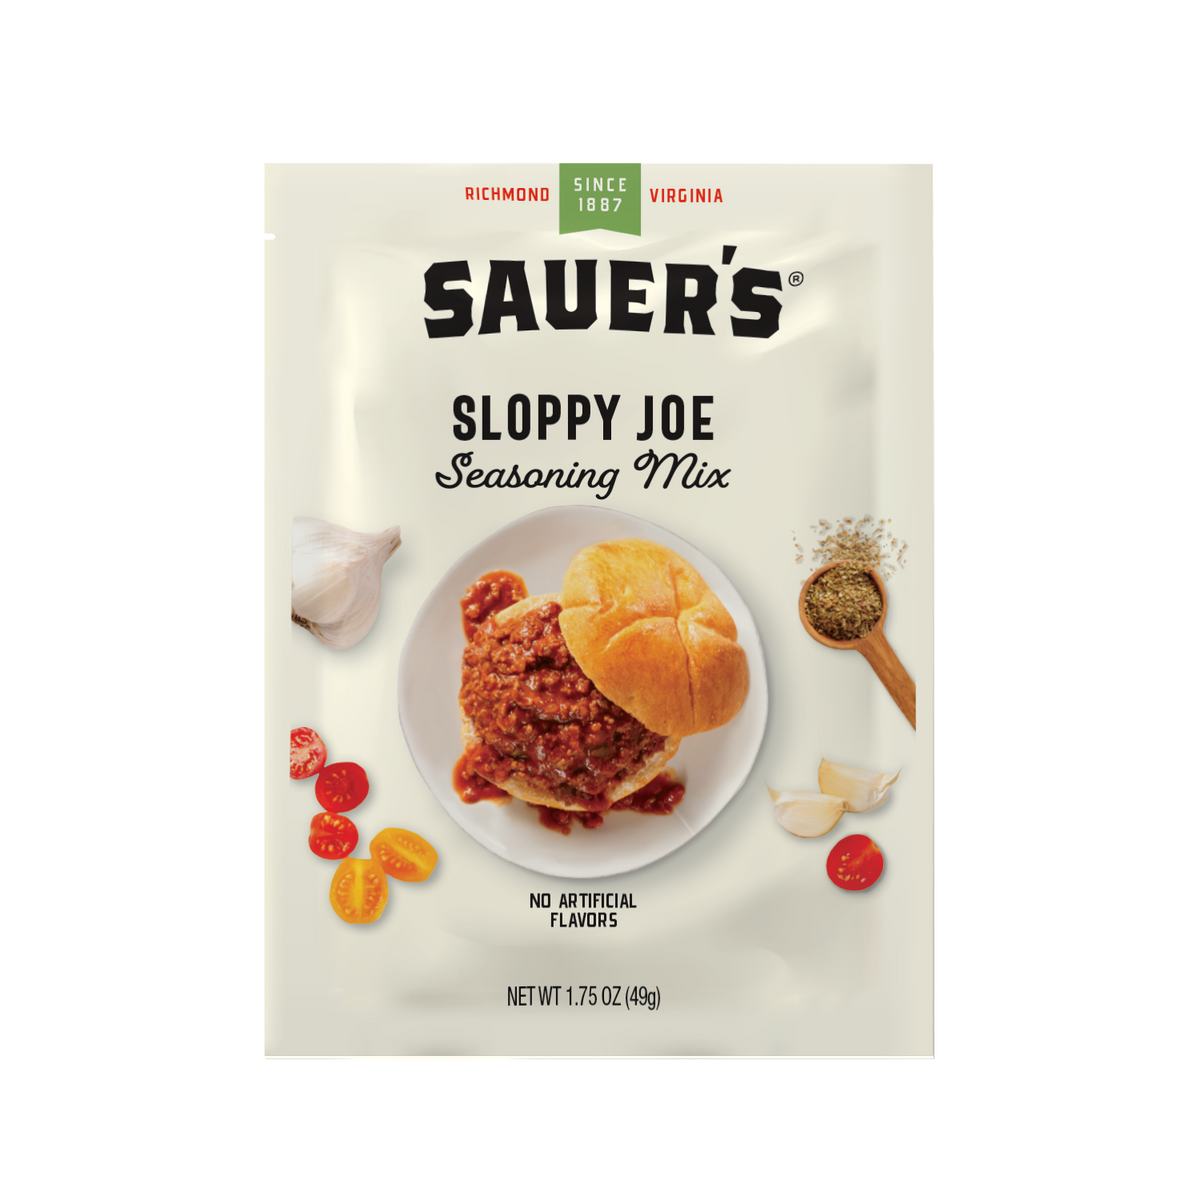 Great Value Sloppy Joe Seasoning Mix, 1.25 oz